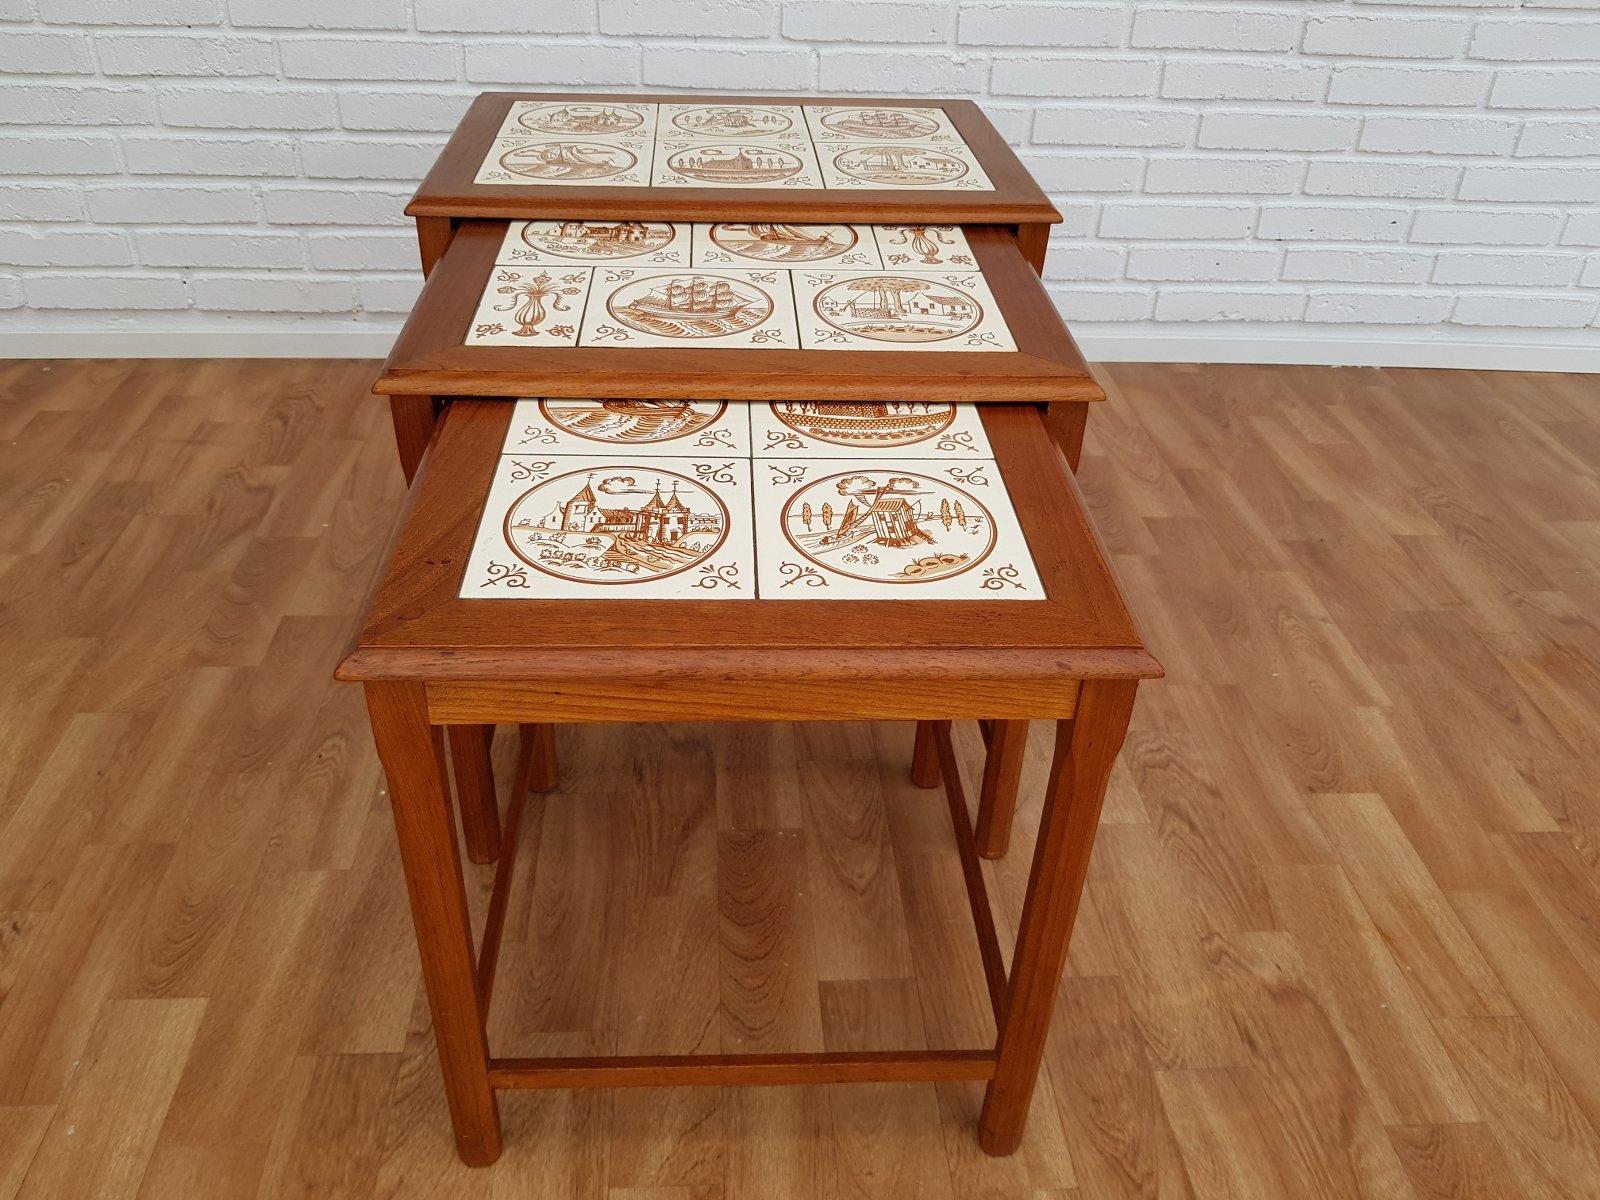 70s, Nesting Table, Danish Design, Hand-Painted Ceramic Tiles, Teak Wood For Sale 9